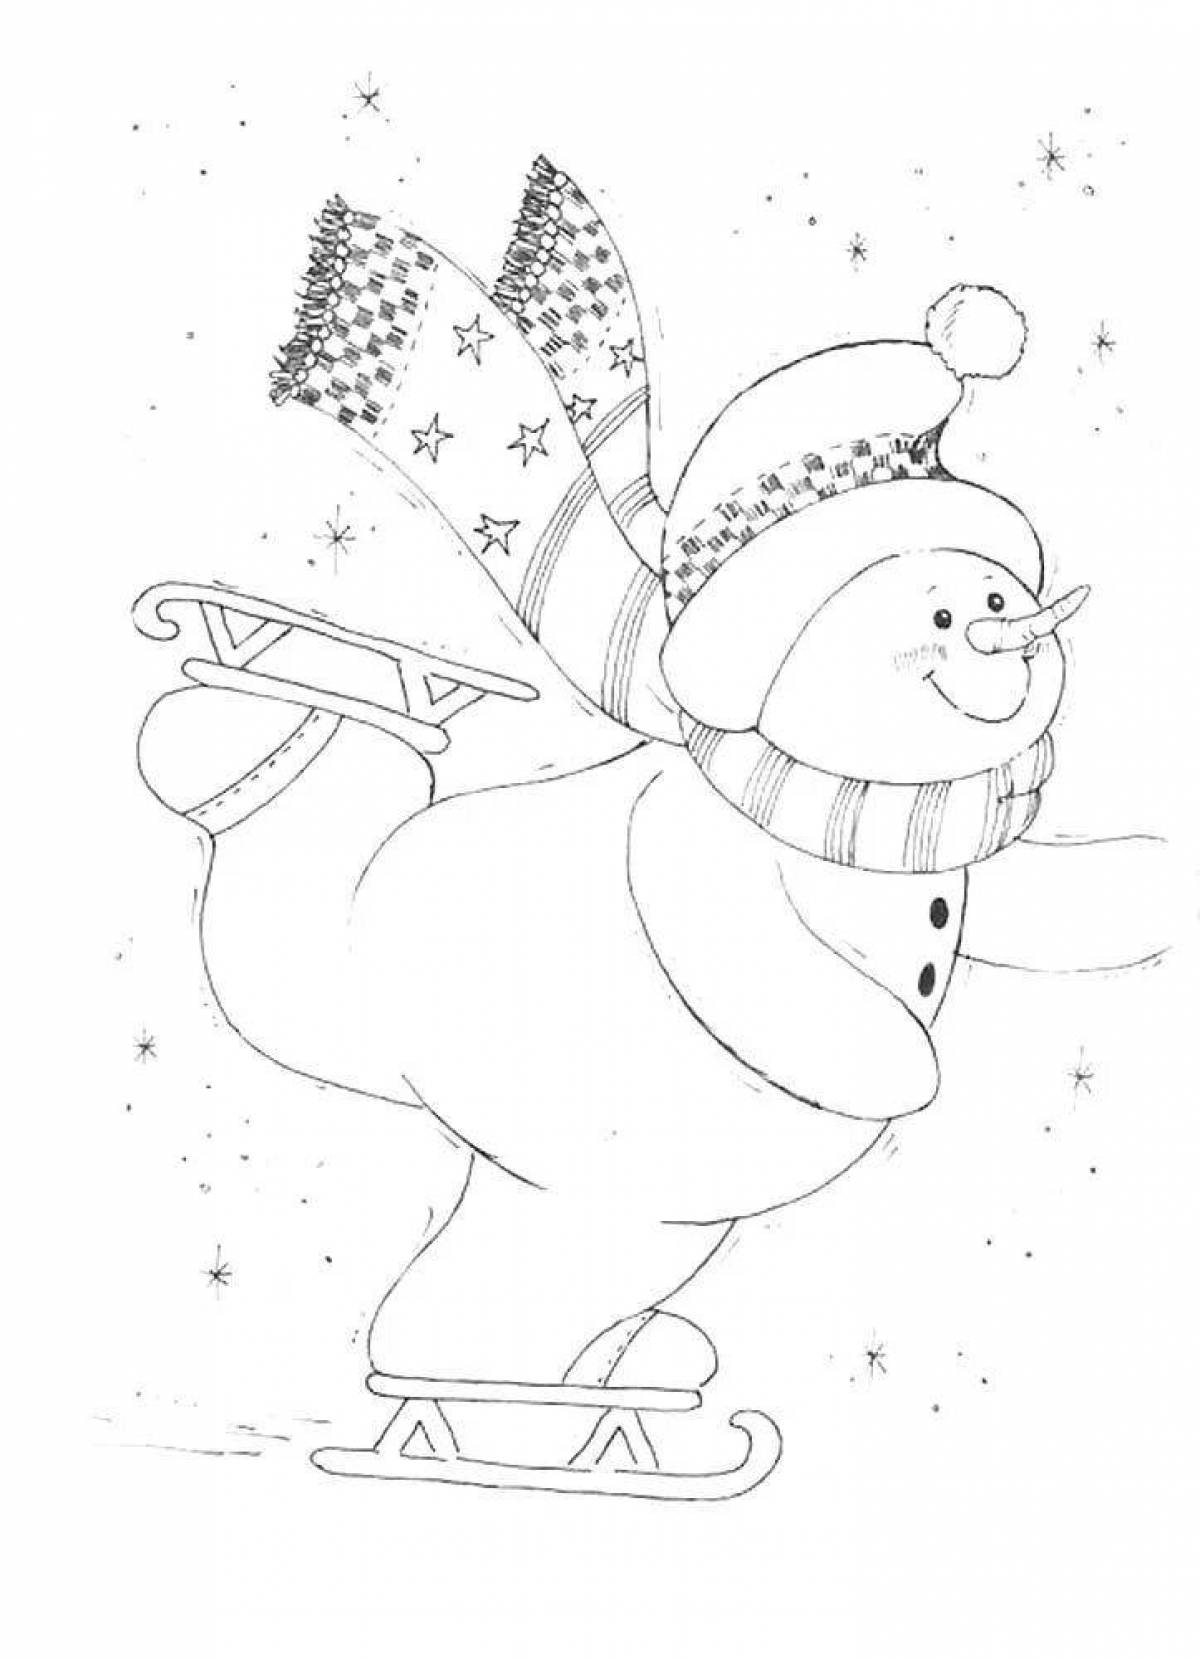 Snowman on skis #10